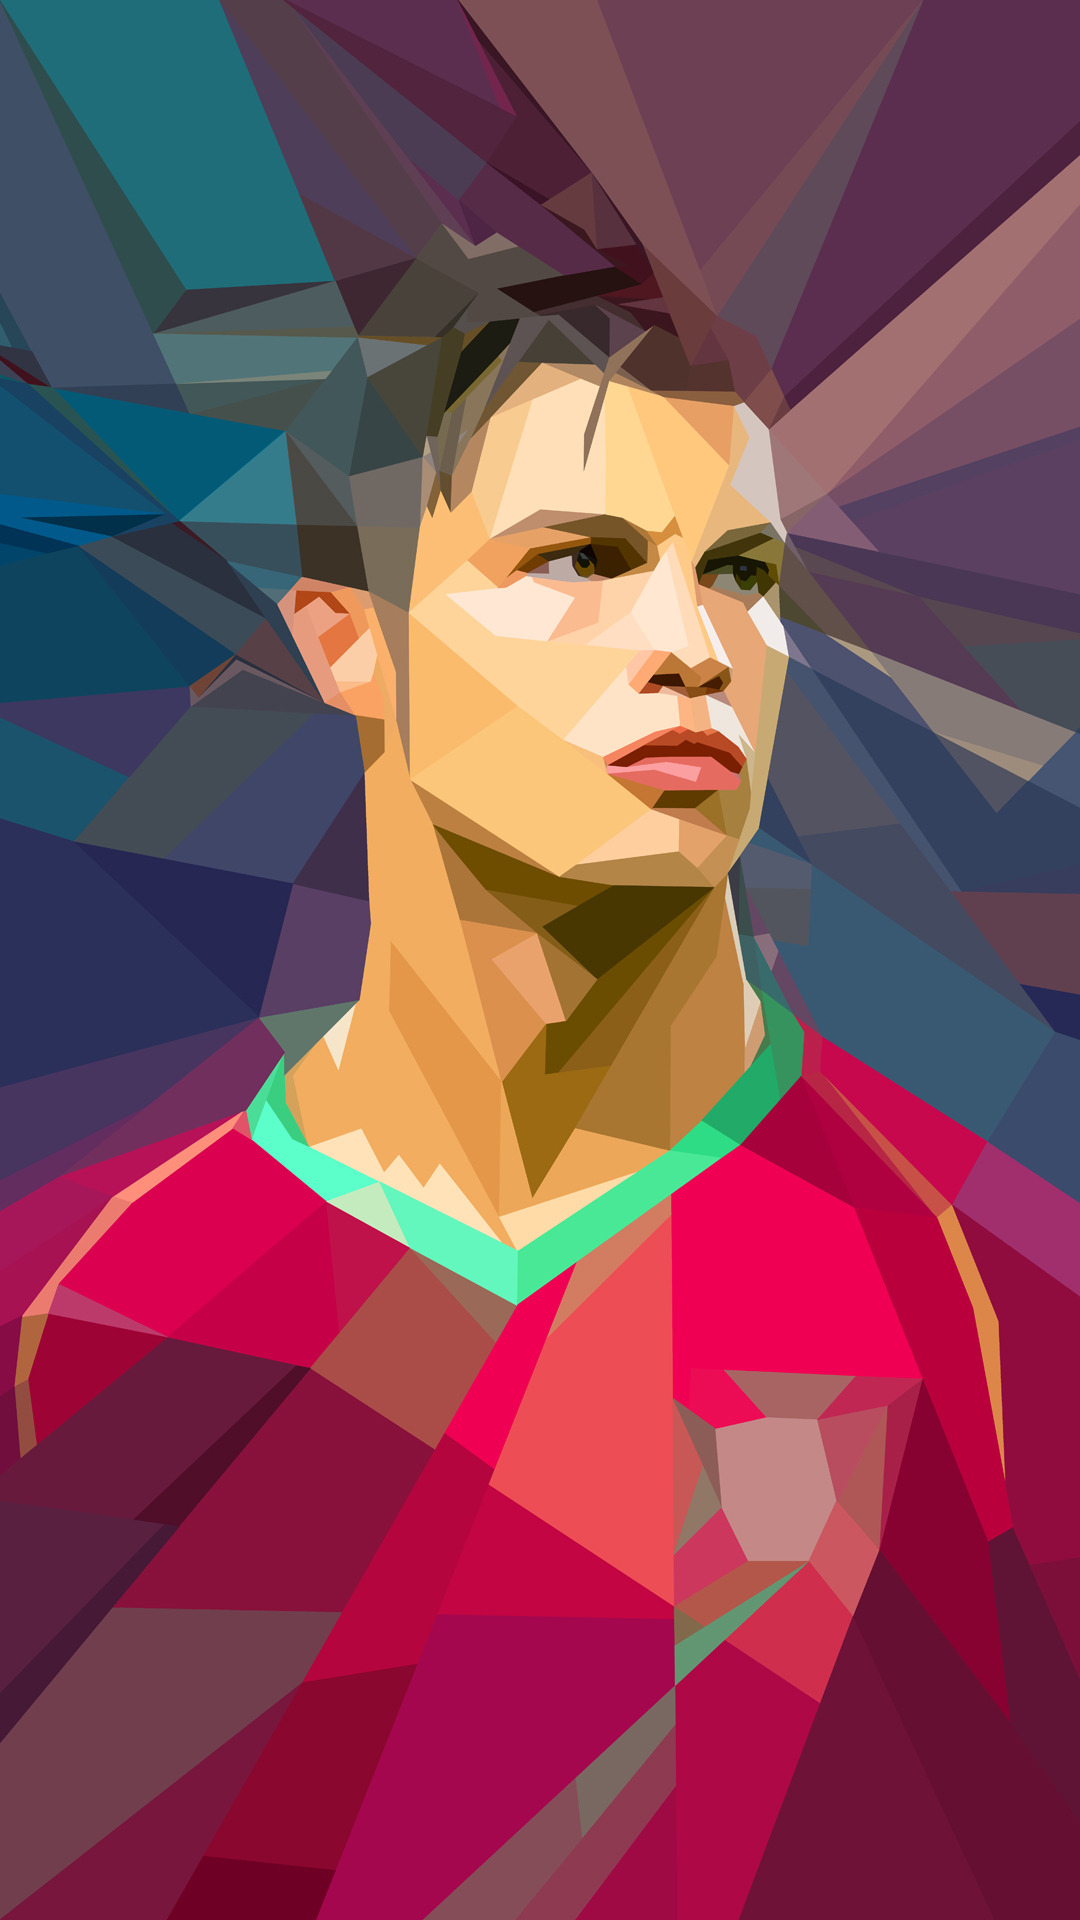 Cristiano Ronaldo Art IPhone Wallpaper  IPhone Wallpapers  iPhone  Wallpapers